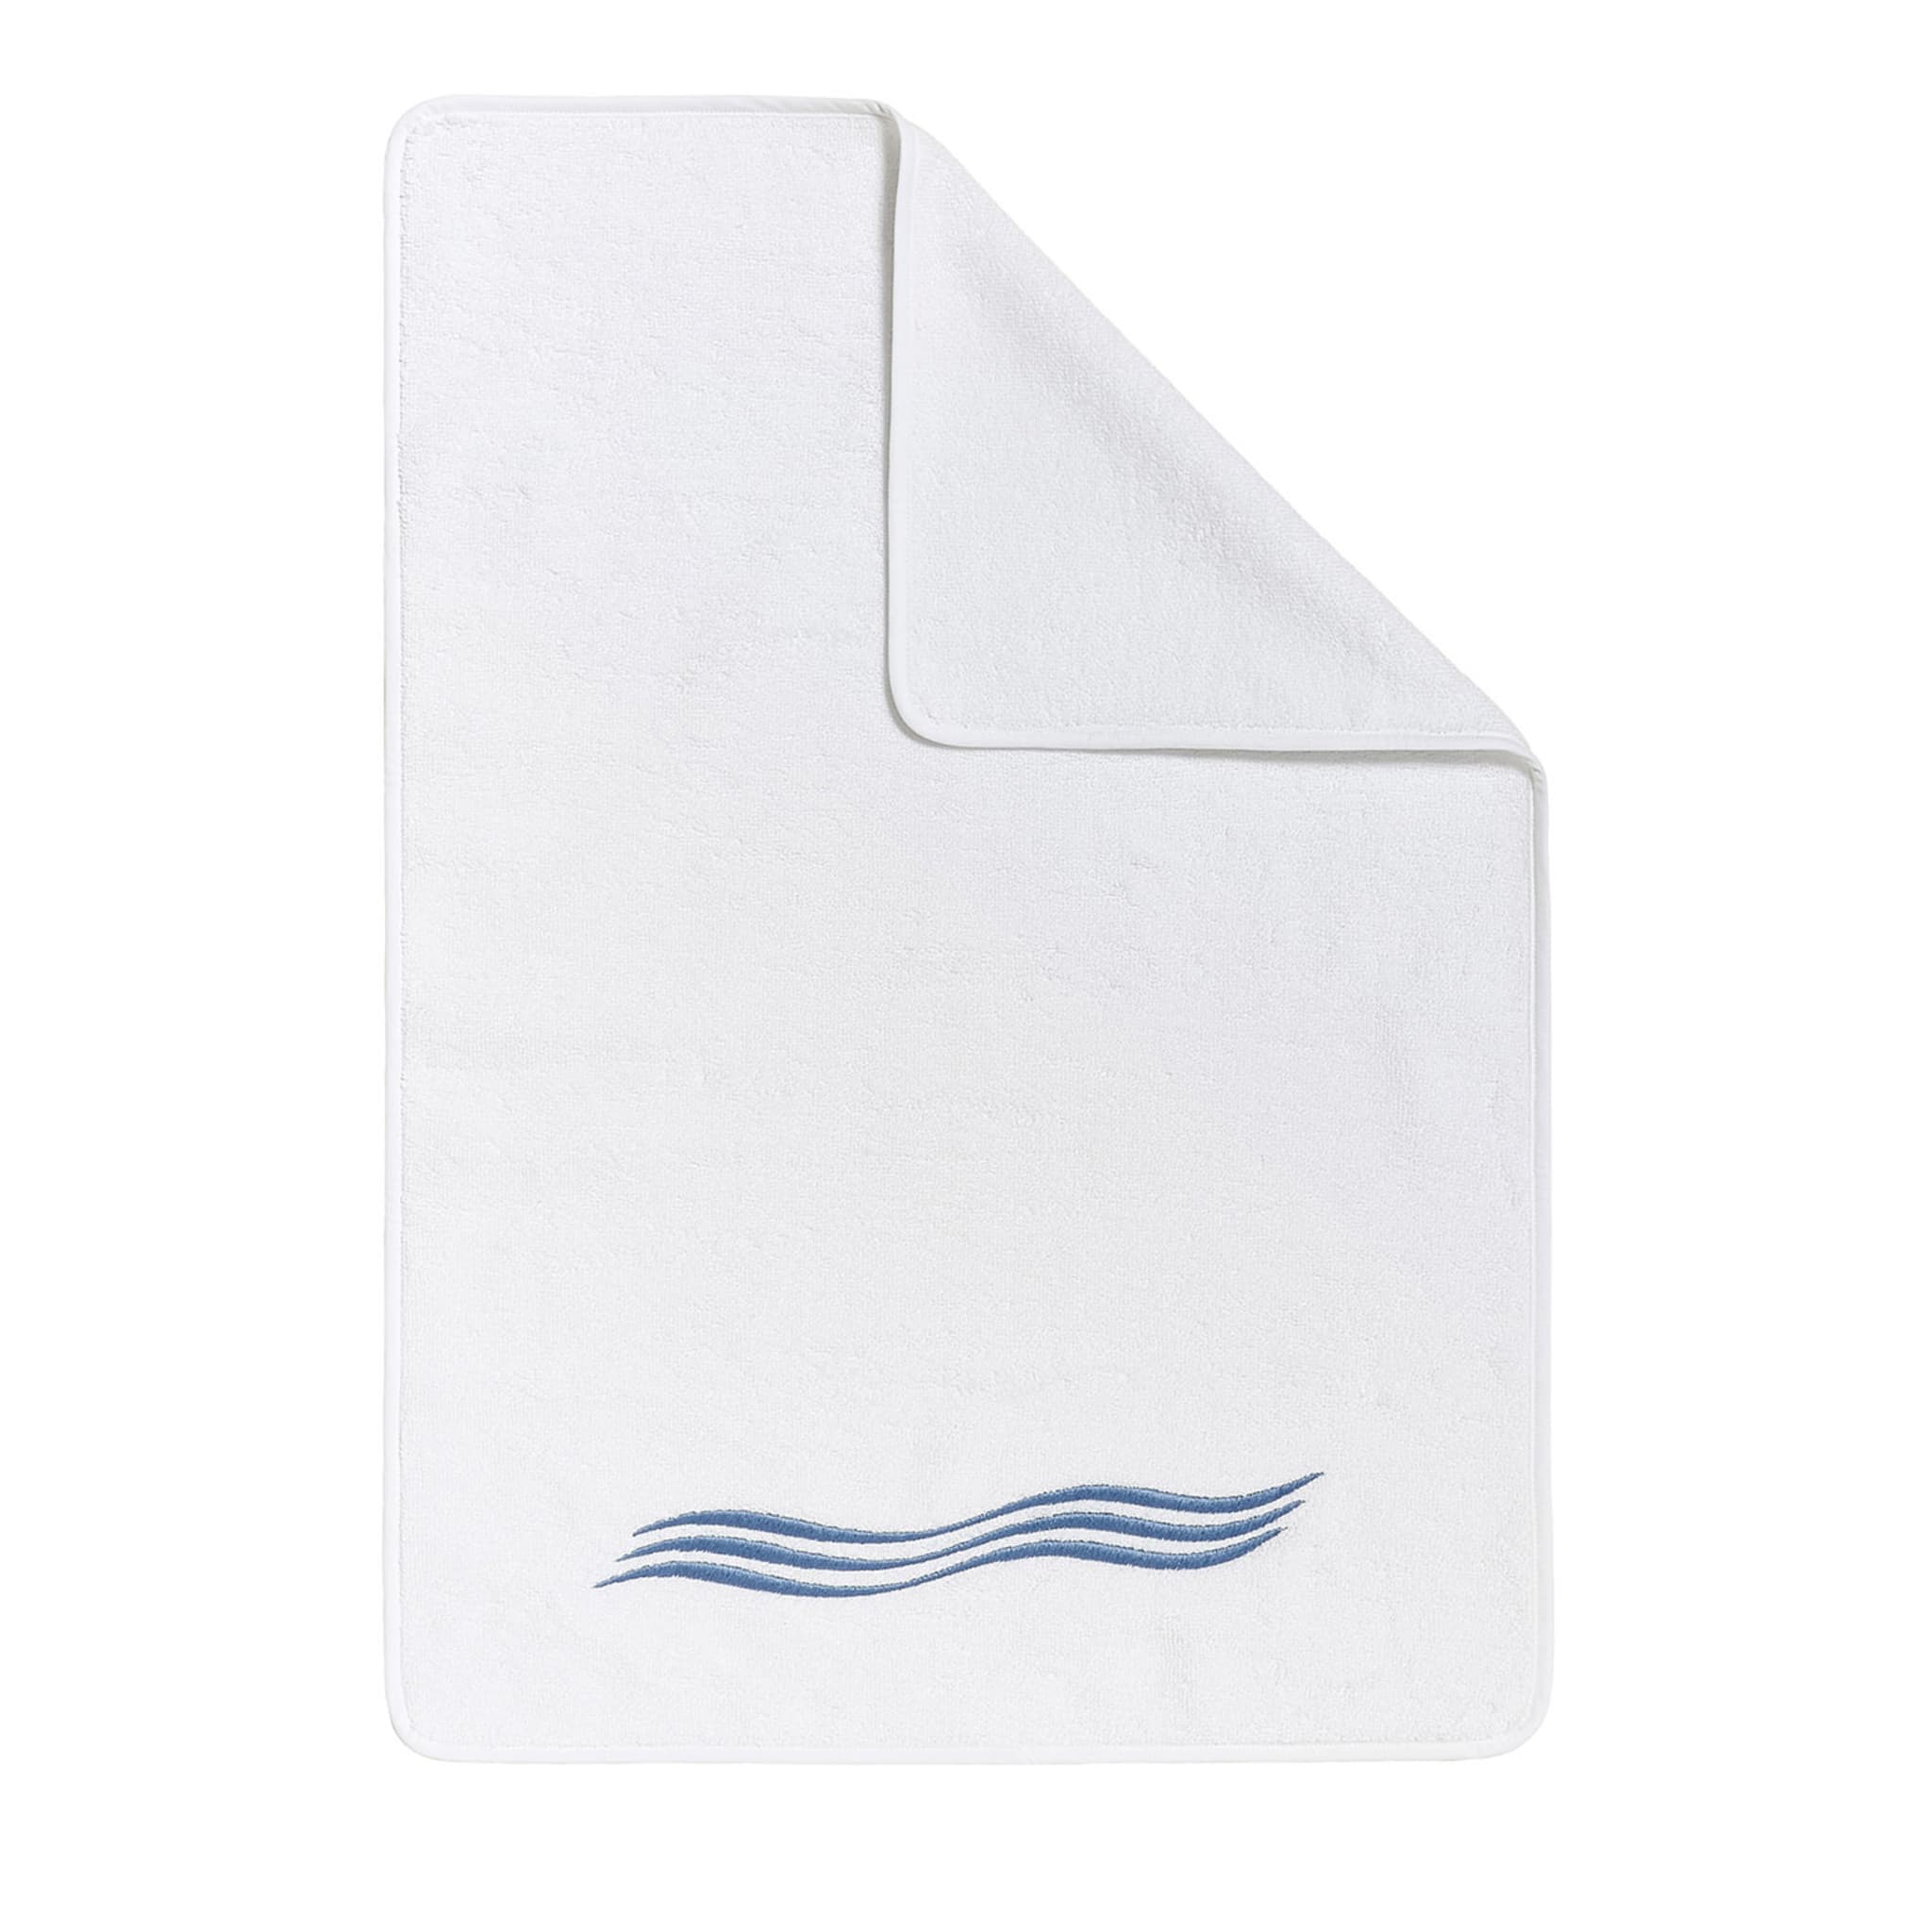 Tuffo White & Assisi Blue Hand Towel - Main view